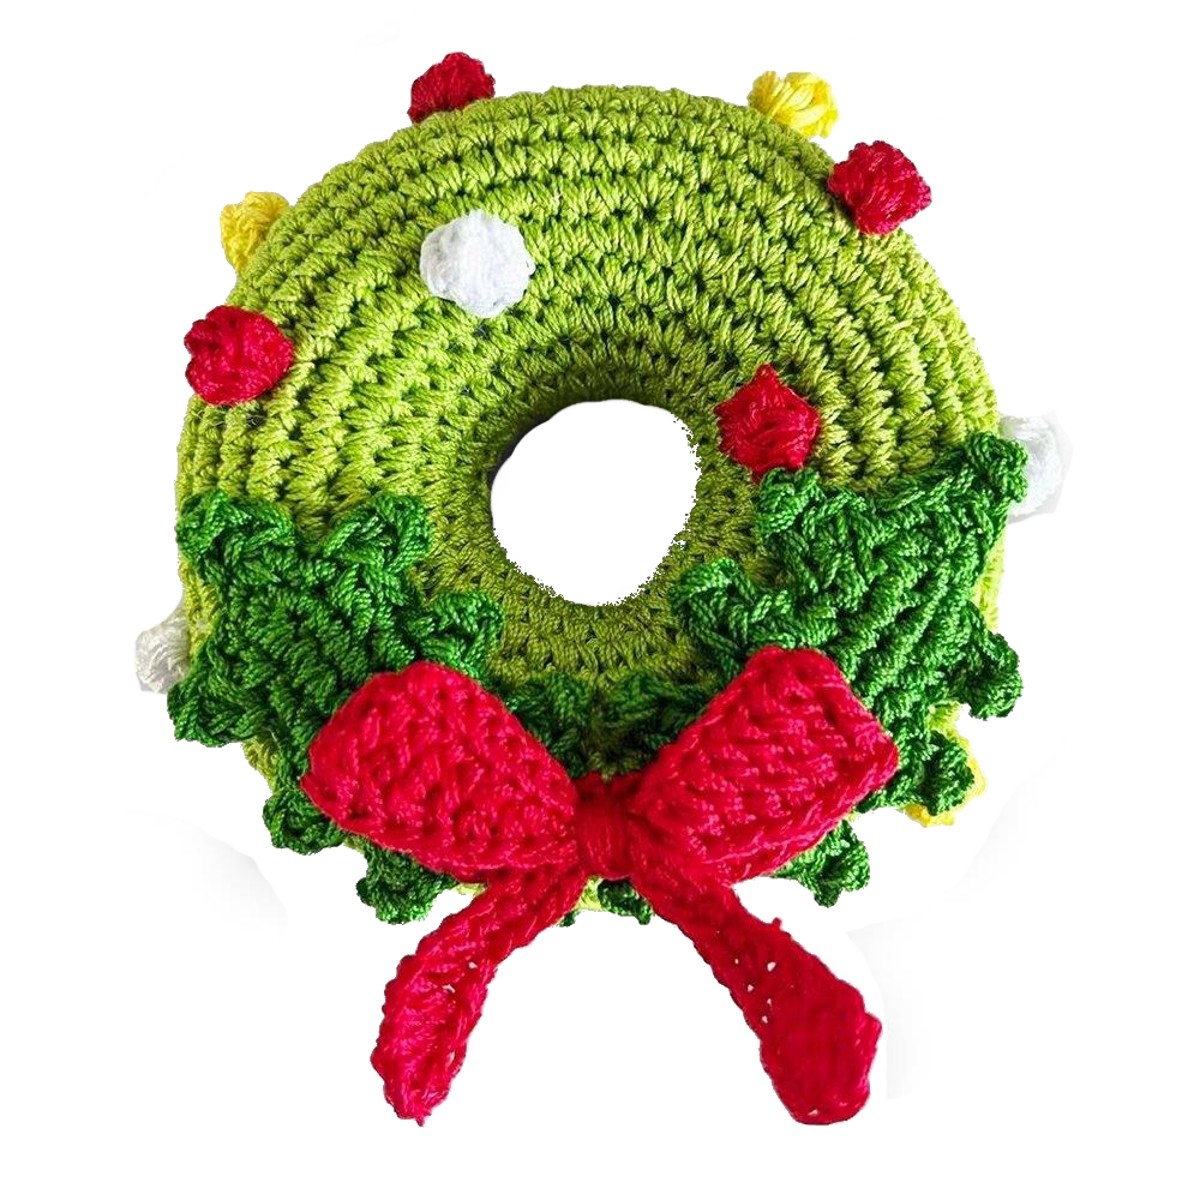 DOGO Holiday Crochet Dog Toy - Christmas Wreath